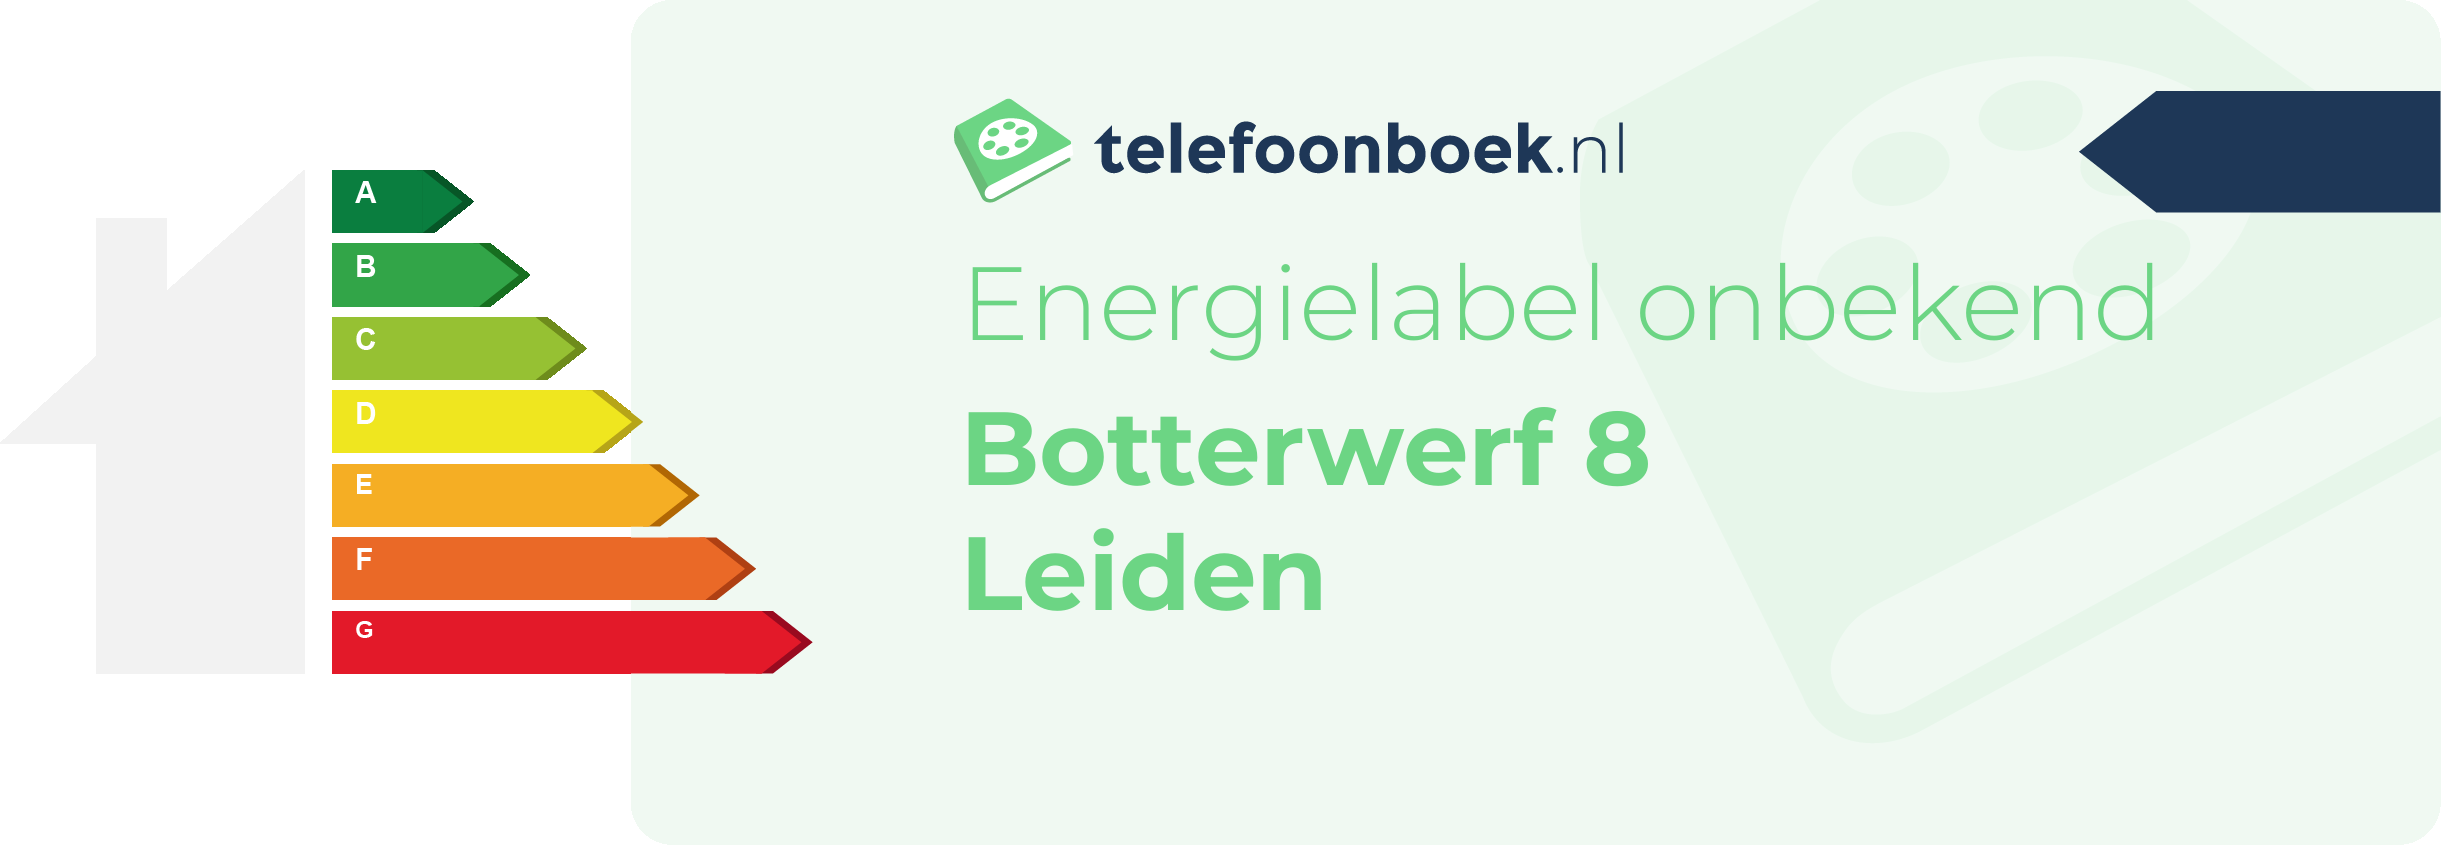 Energielabel Botterwerf 8 Leiden